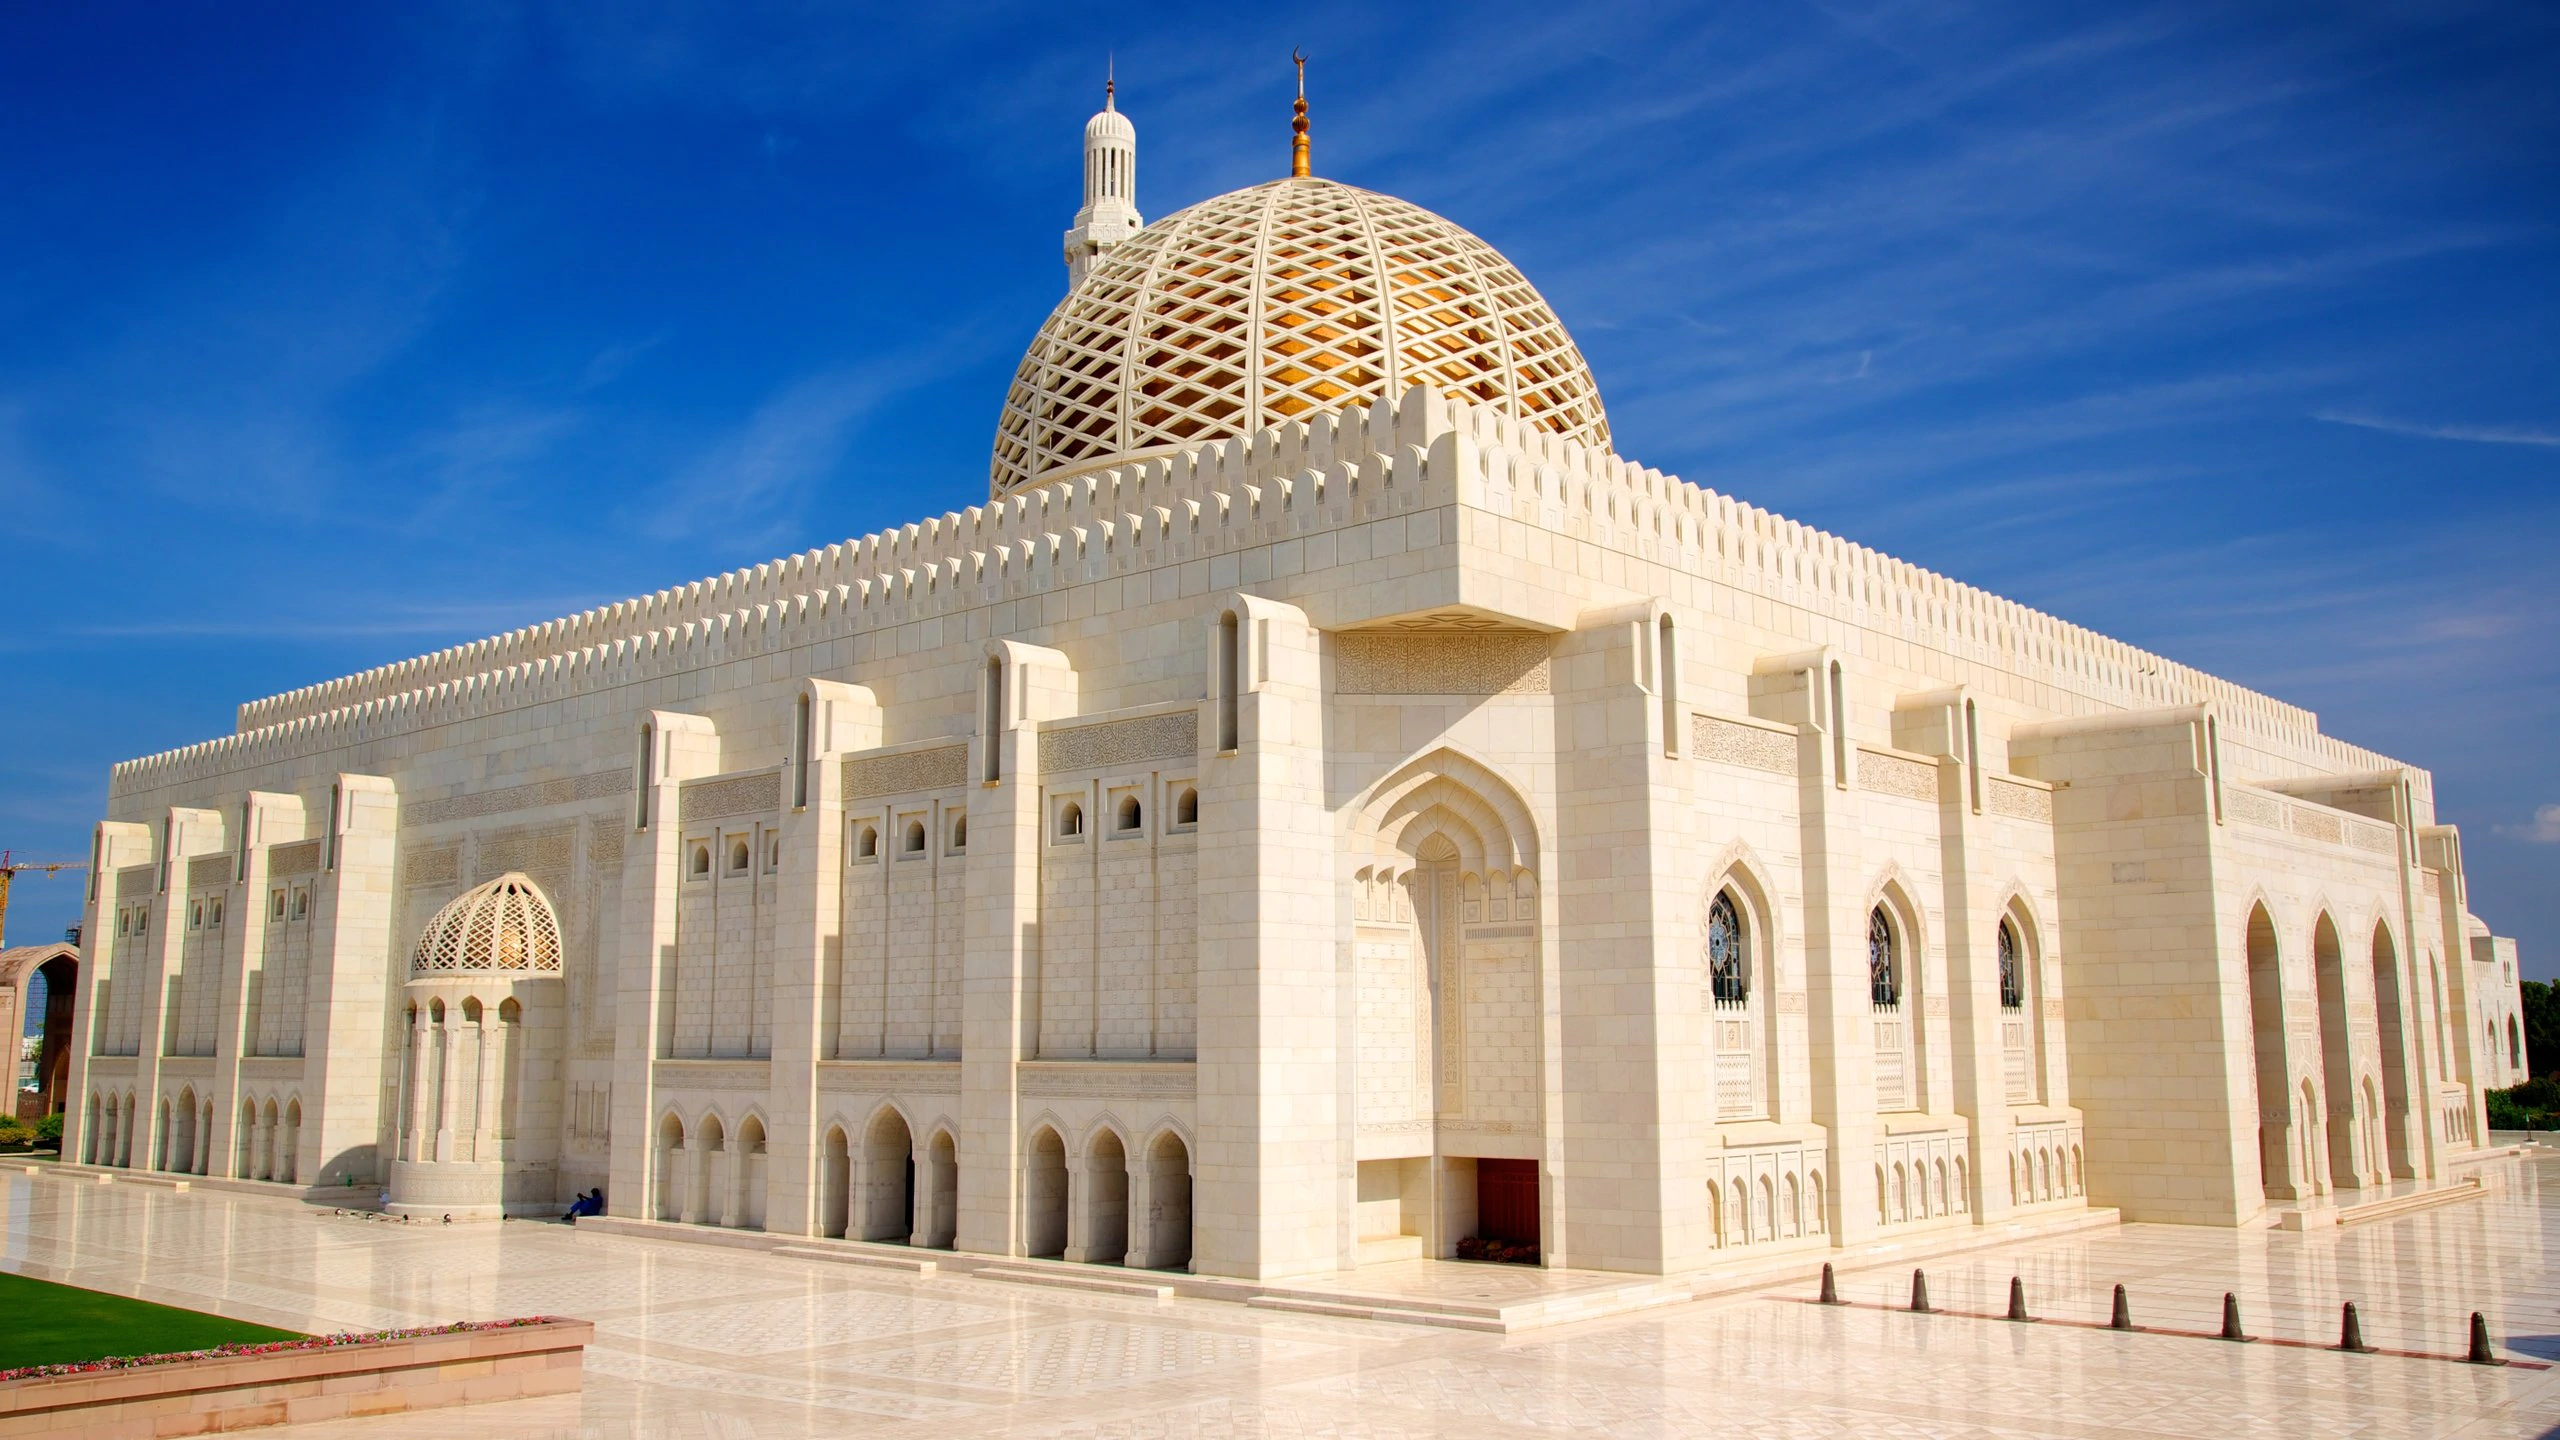 Sultan Quboos Grand Mosque